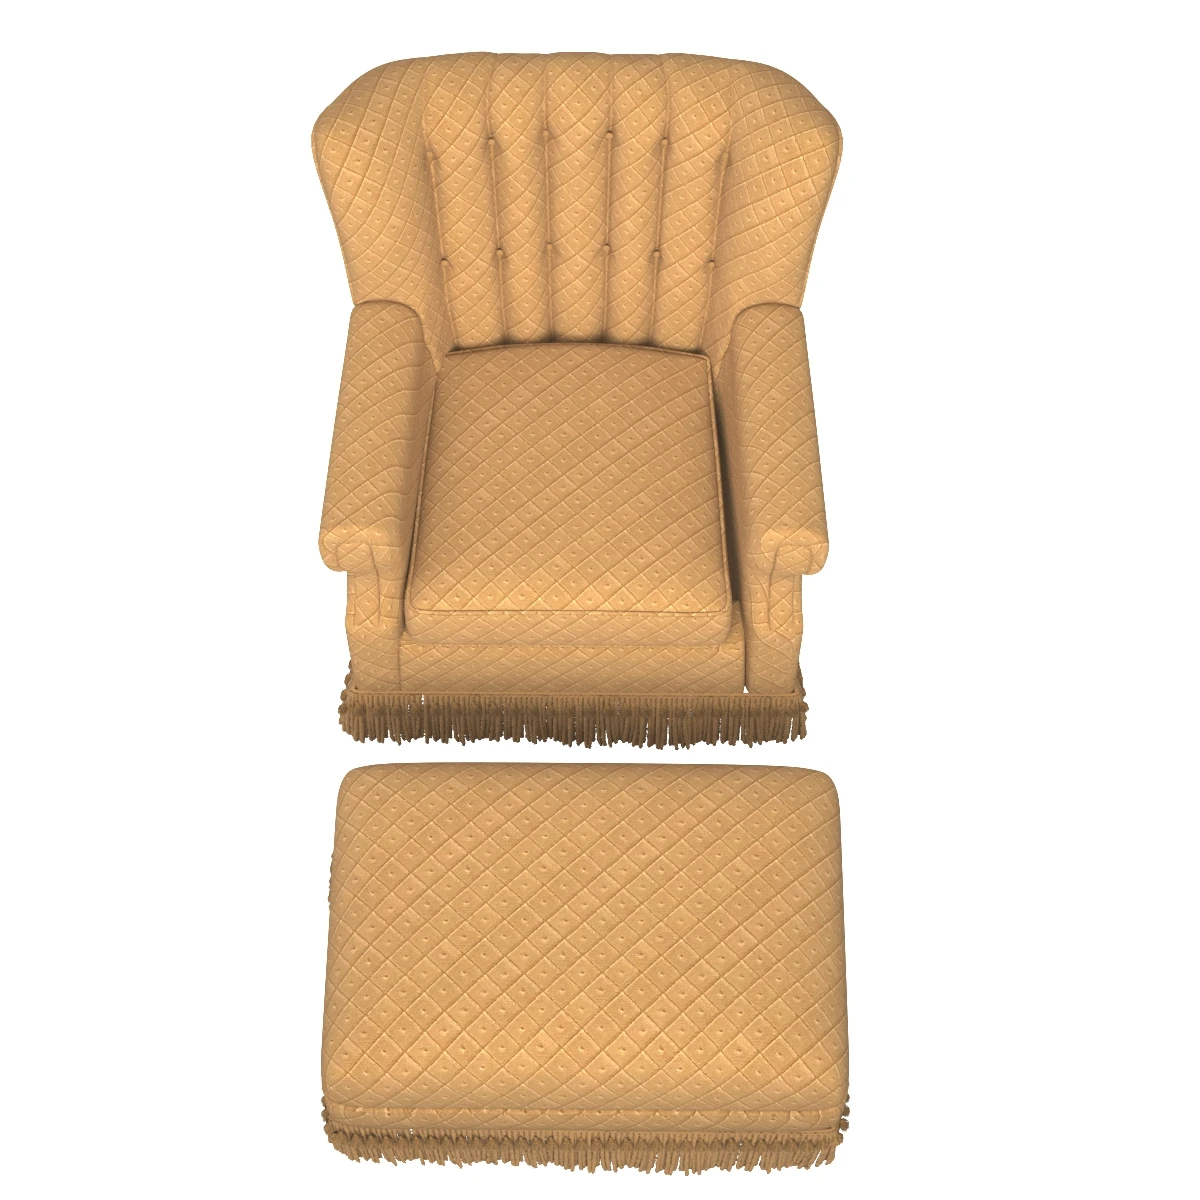 Art Deco Club Chair and Ottoman by Swaim 3D Model_03